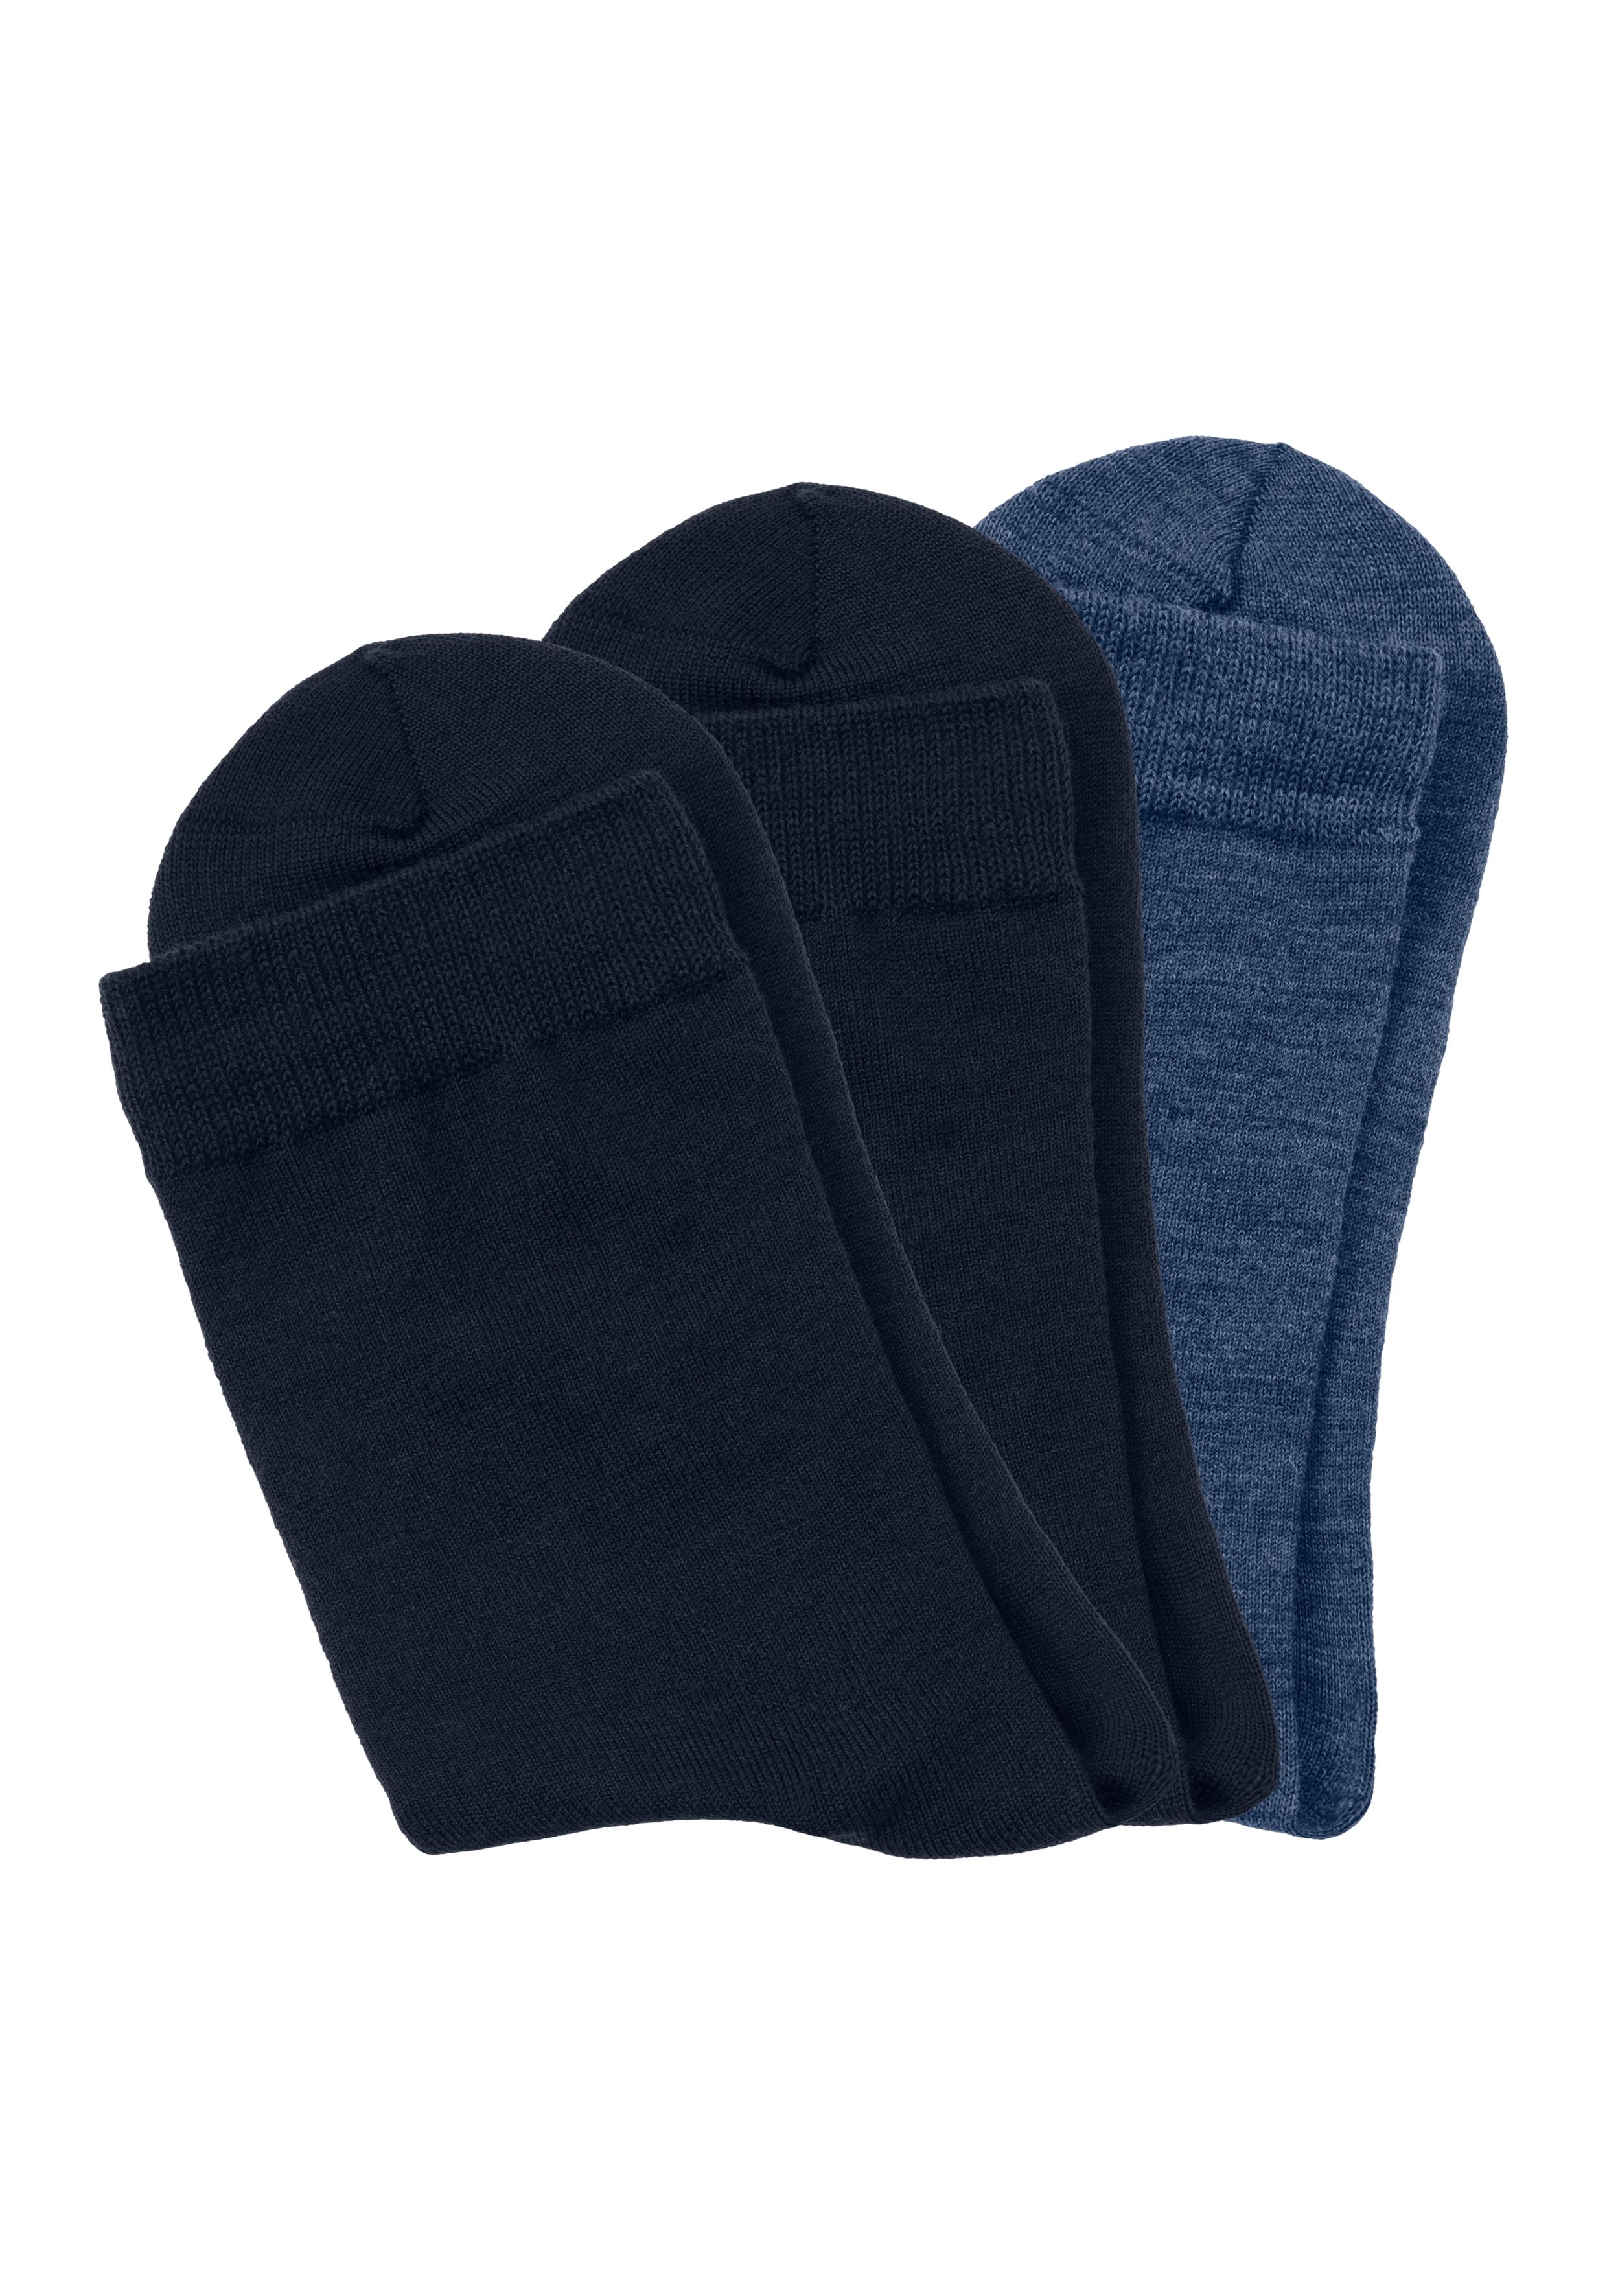 Bench. Socken, (3 Paar), Wollsocken aus flauschigem Material » LASCANA |  Bademode, Unterwäsche & Lingerie online kaufen